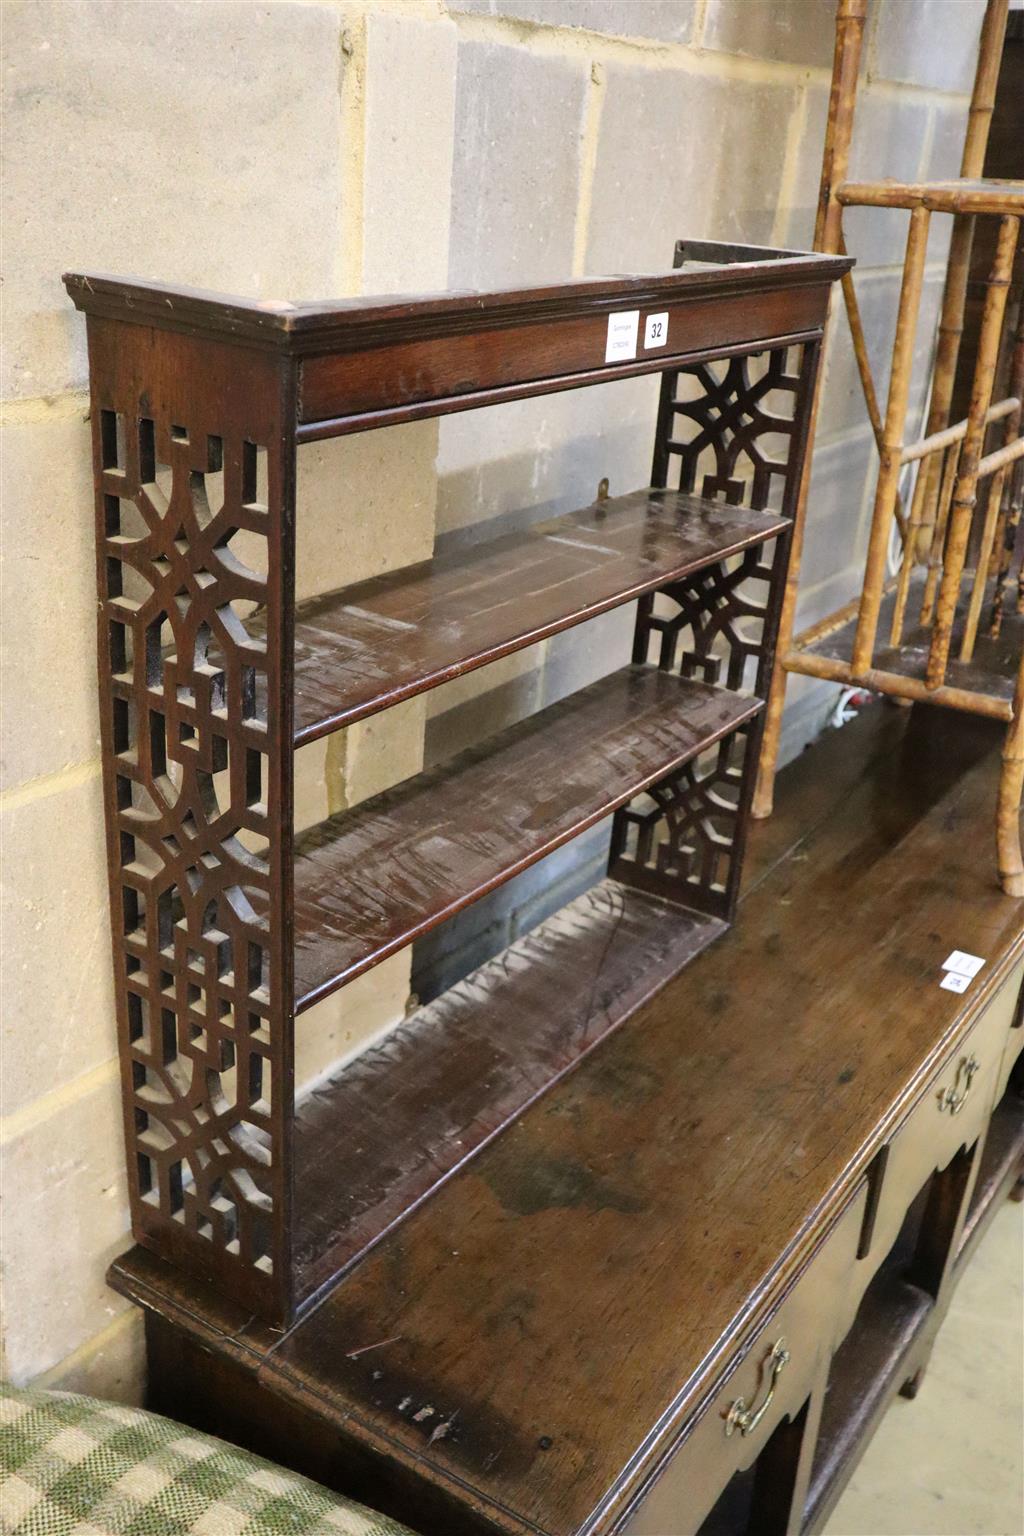 A George III style mahogany three shelf wall bracket, width 74cm, depth 16cm, height 67cm